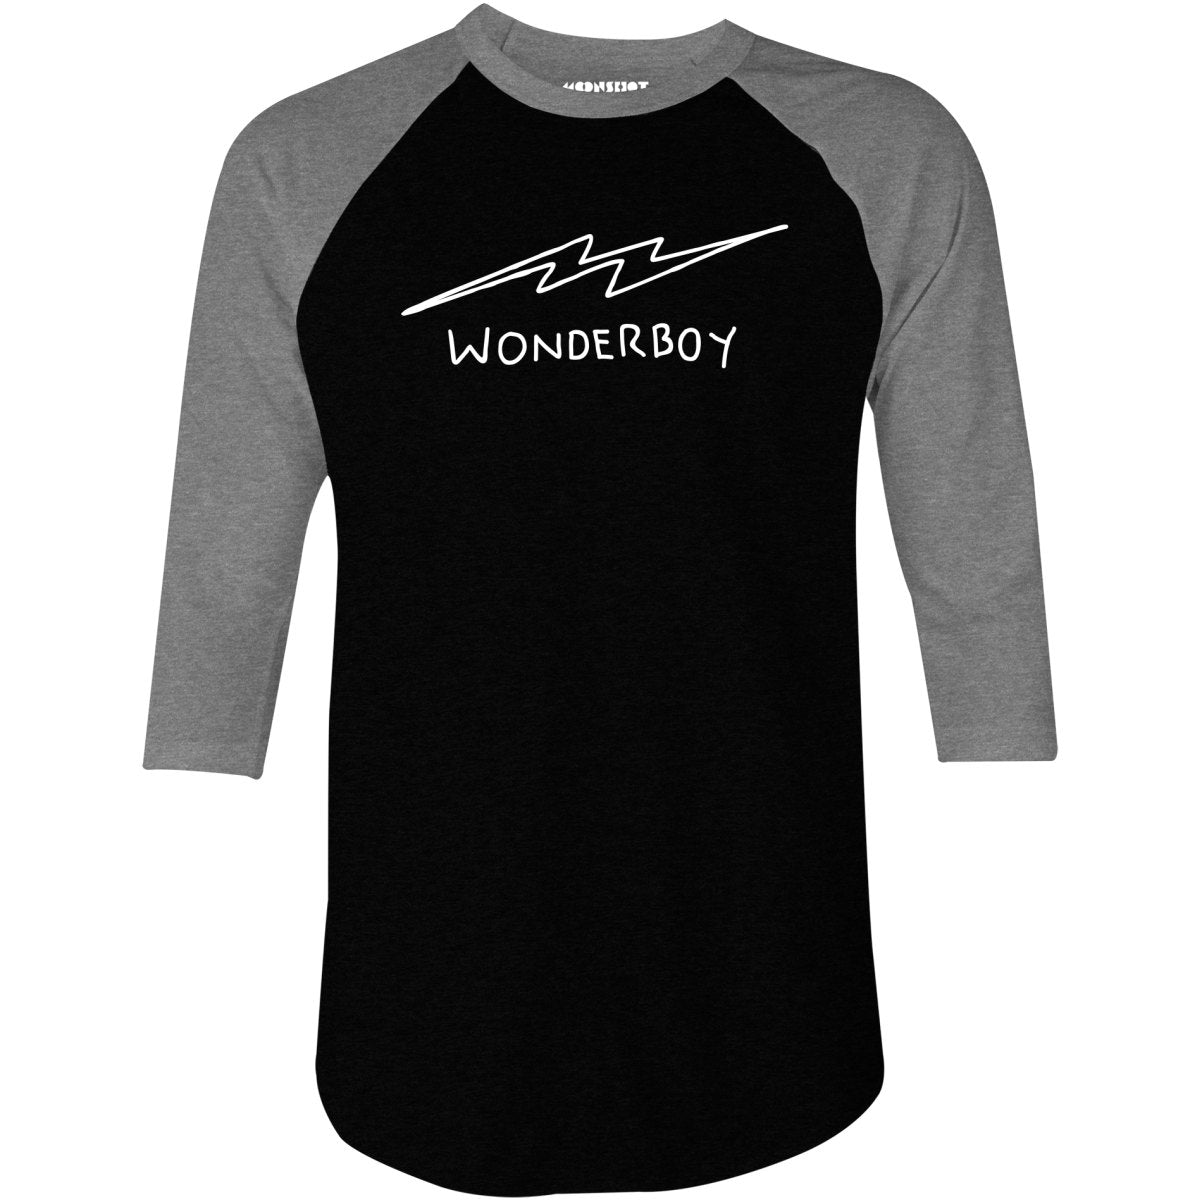 Roy Hobbs Wonderboy Bat - 3/4 Sleeve Raglan T-Shirt